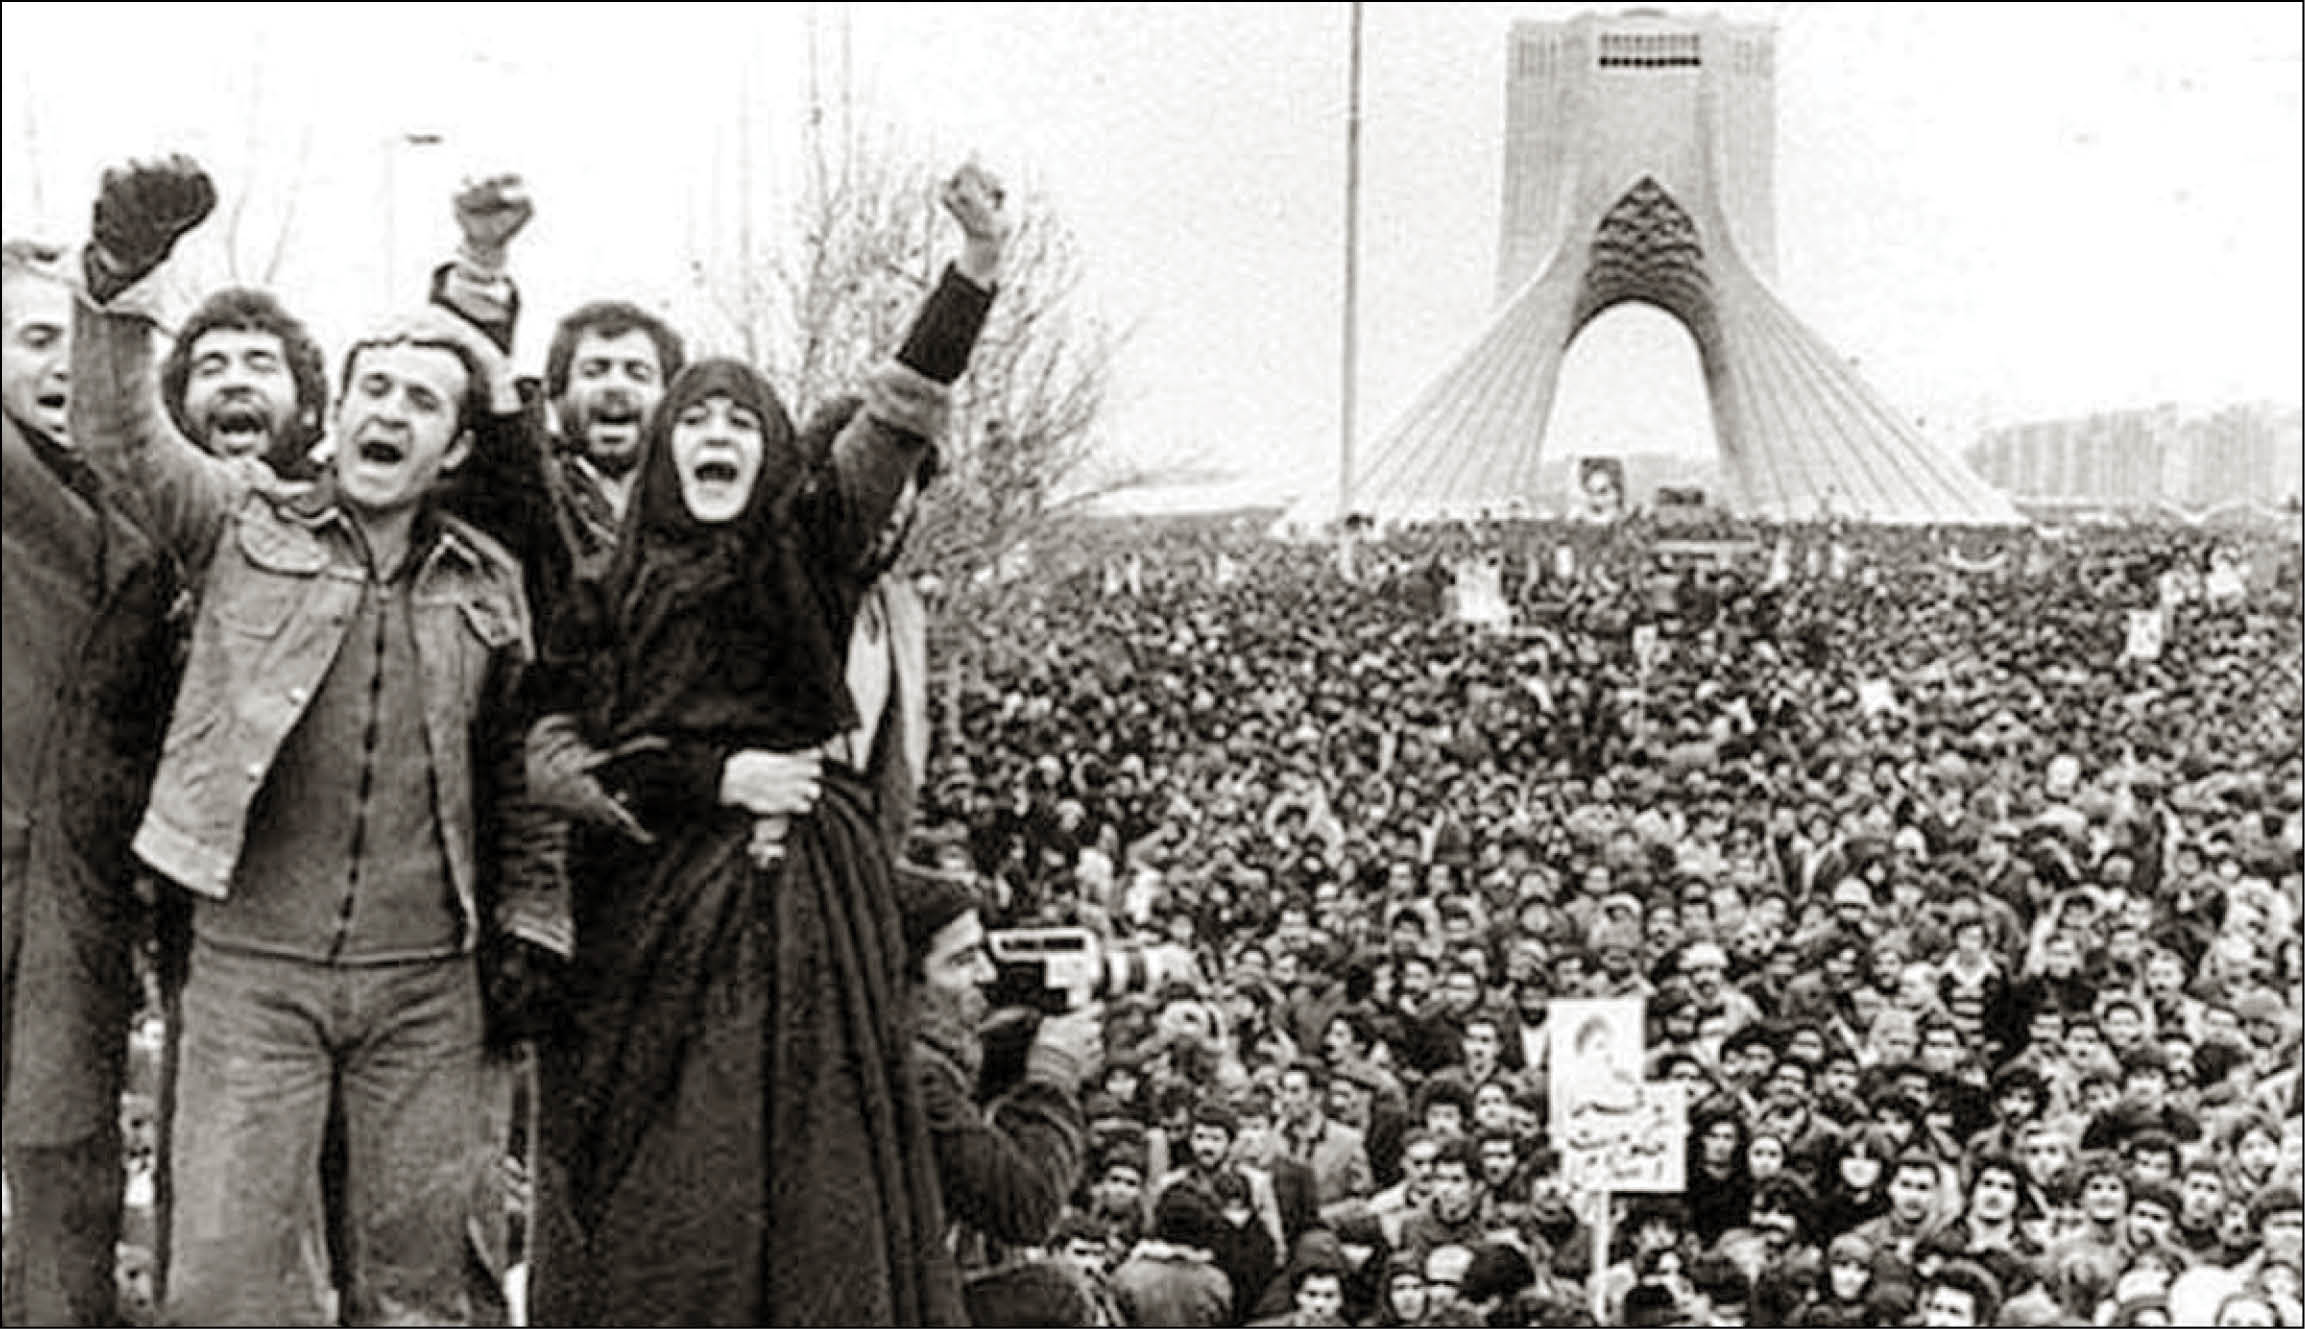 انقلاب اسلامی و مسئله اصالت